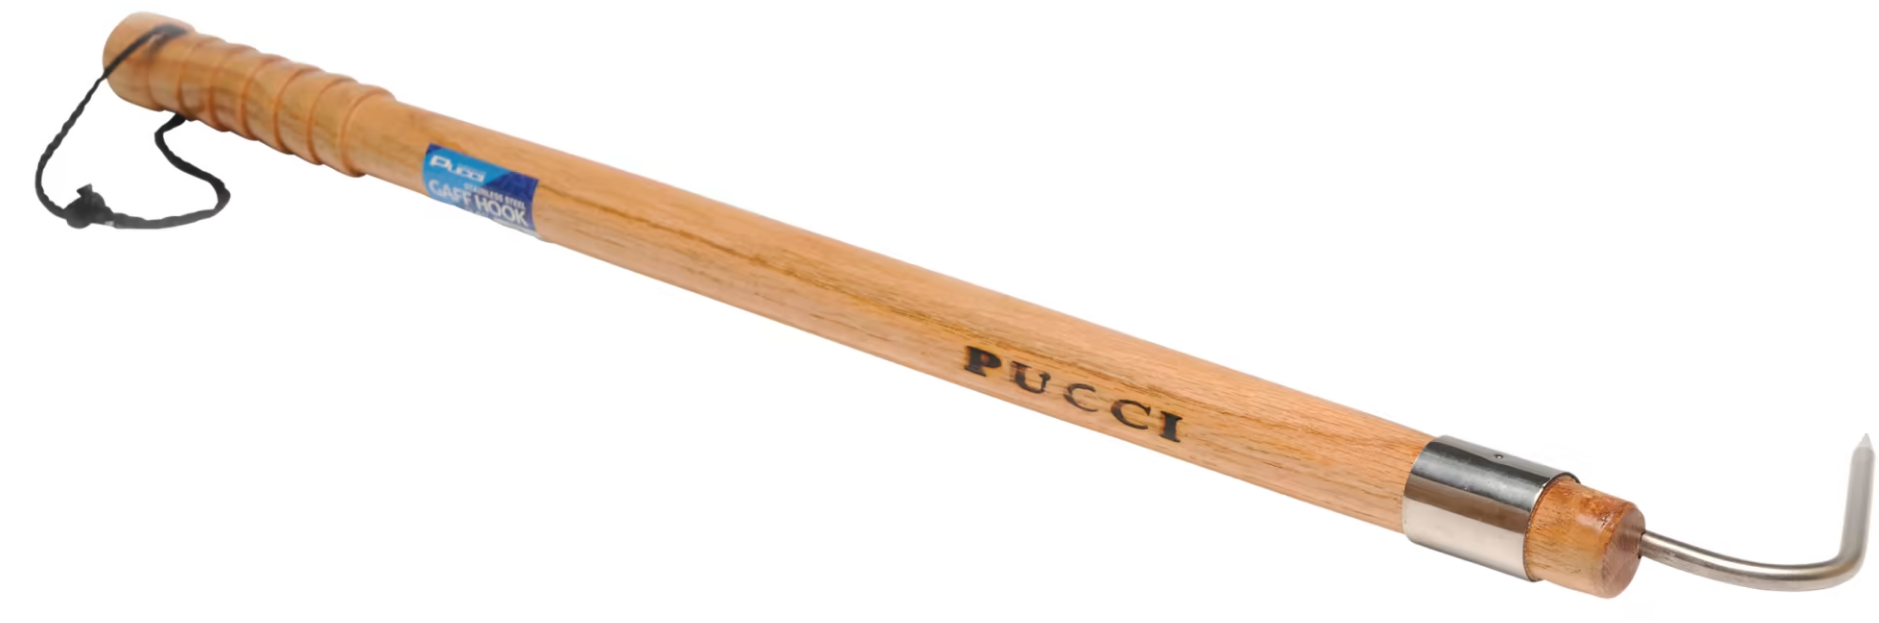 Pucci Gaff Wood Handle